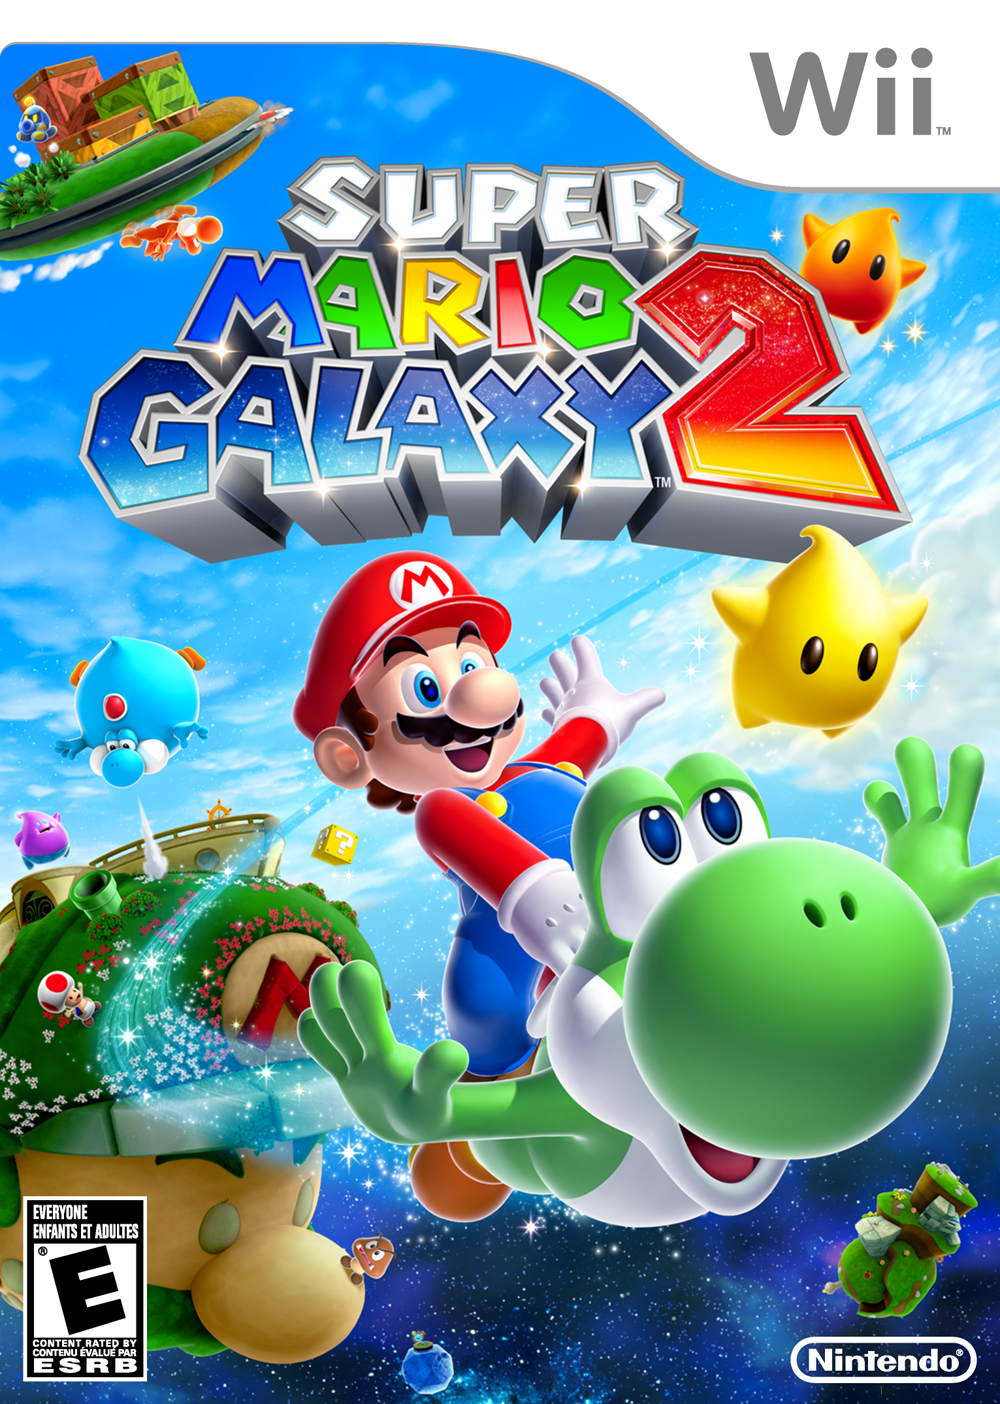 Development of the Super Mario Galaxy series, Nintendo